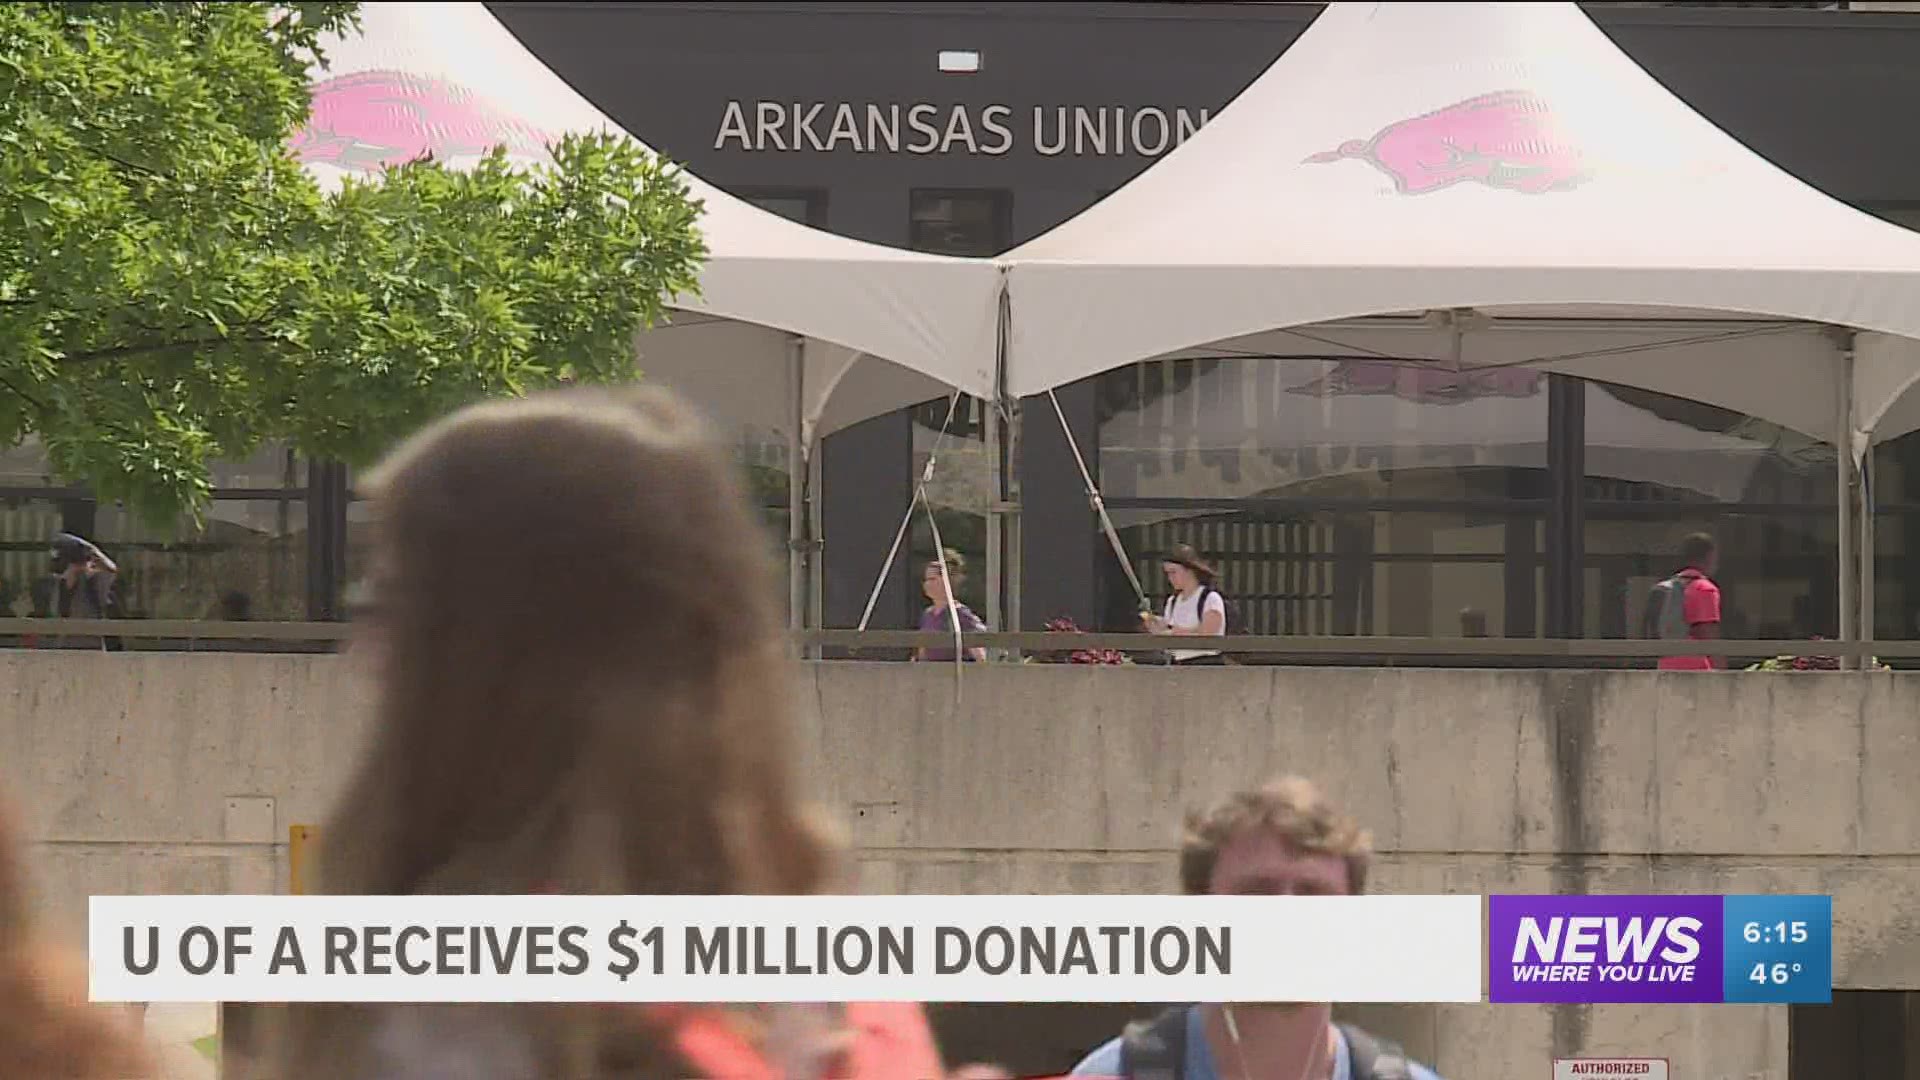 The University of Arkansas receives $1 million donation